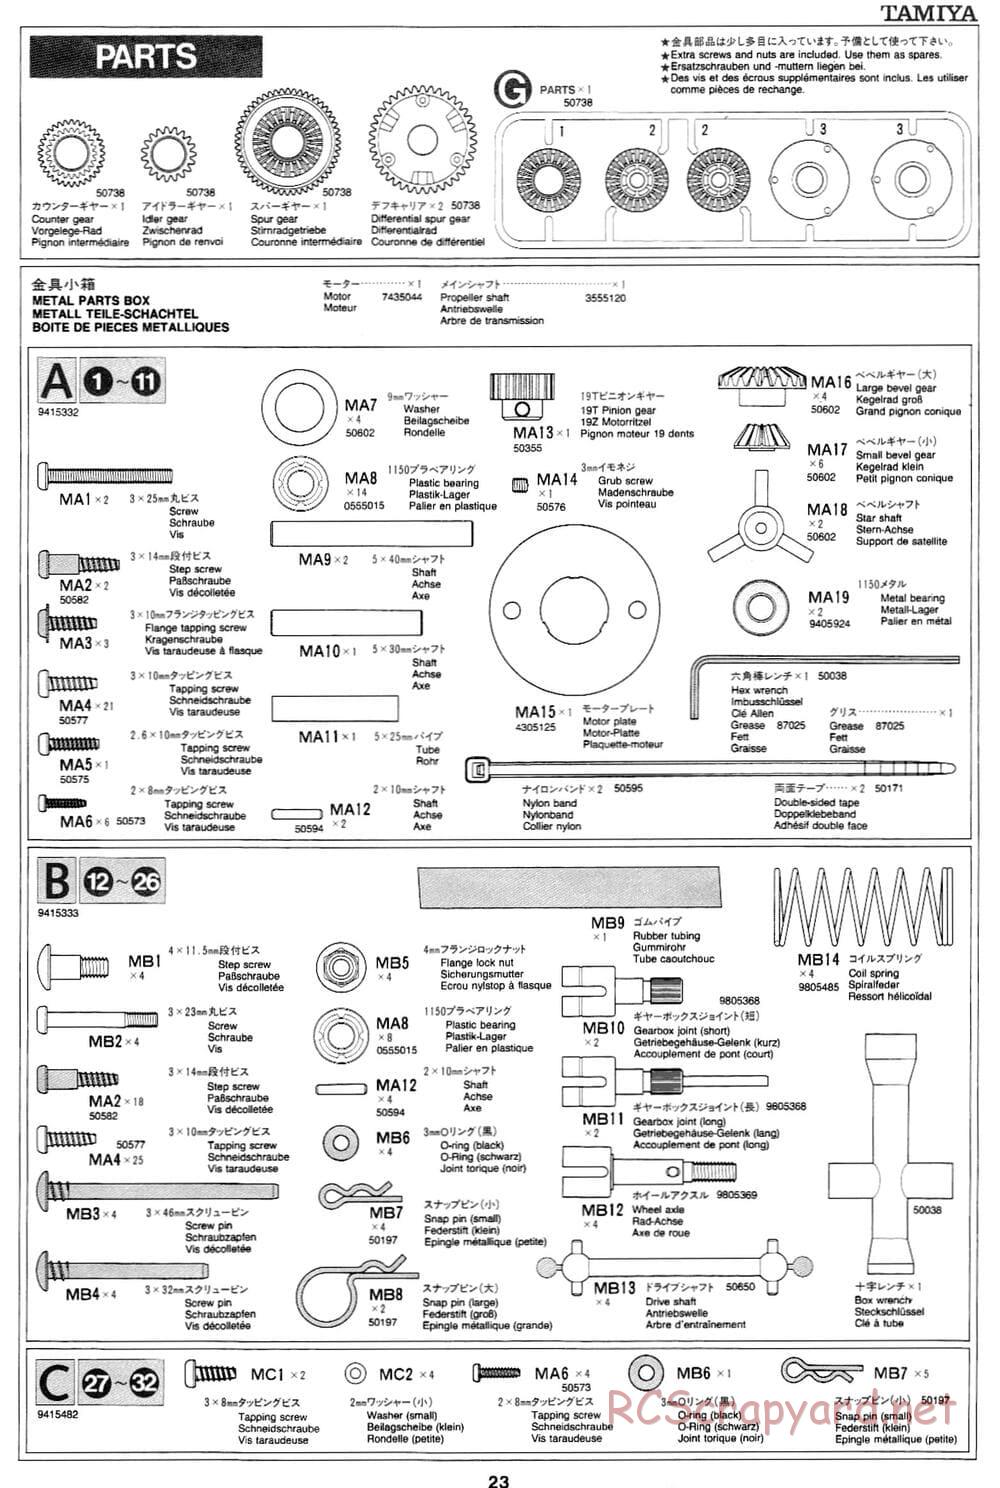 Tamiya - Subaru Impreza WRC - TL-01 Chassis - Manual - Page 23